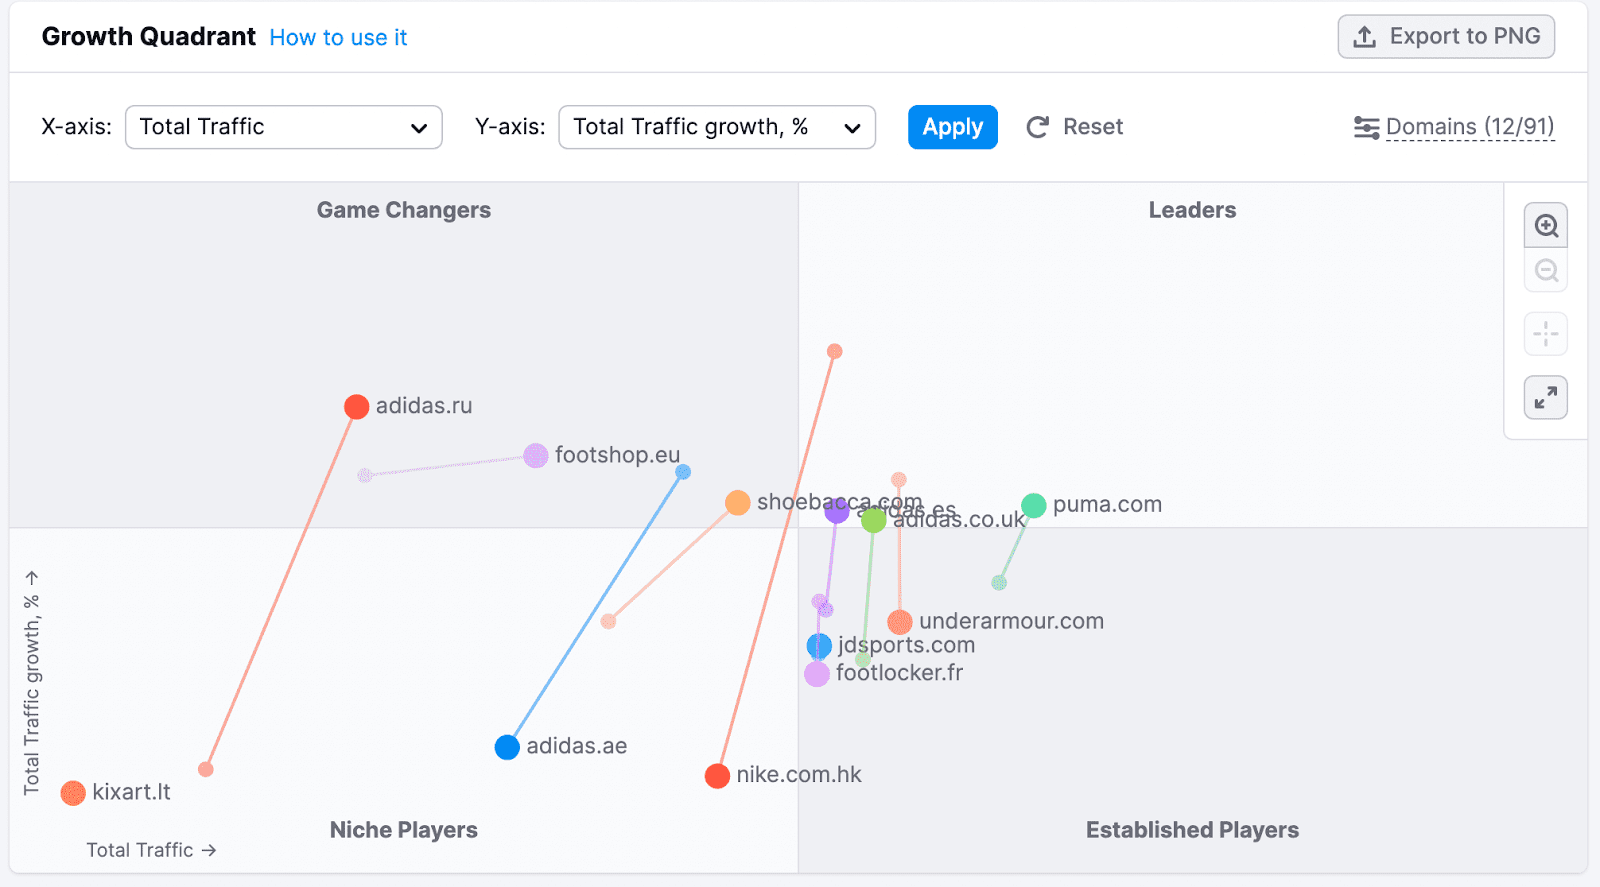 "Growth Quadrant" widget in the Market Explorer tool